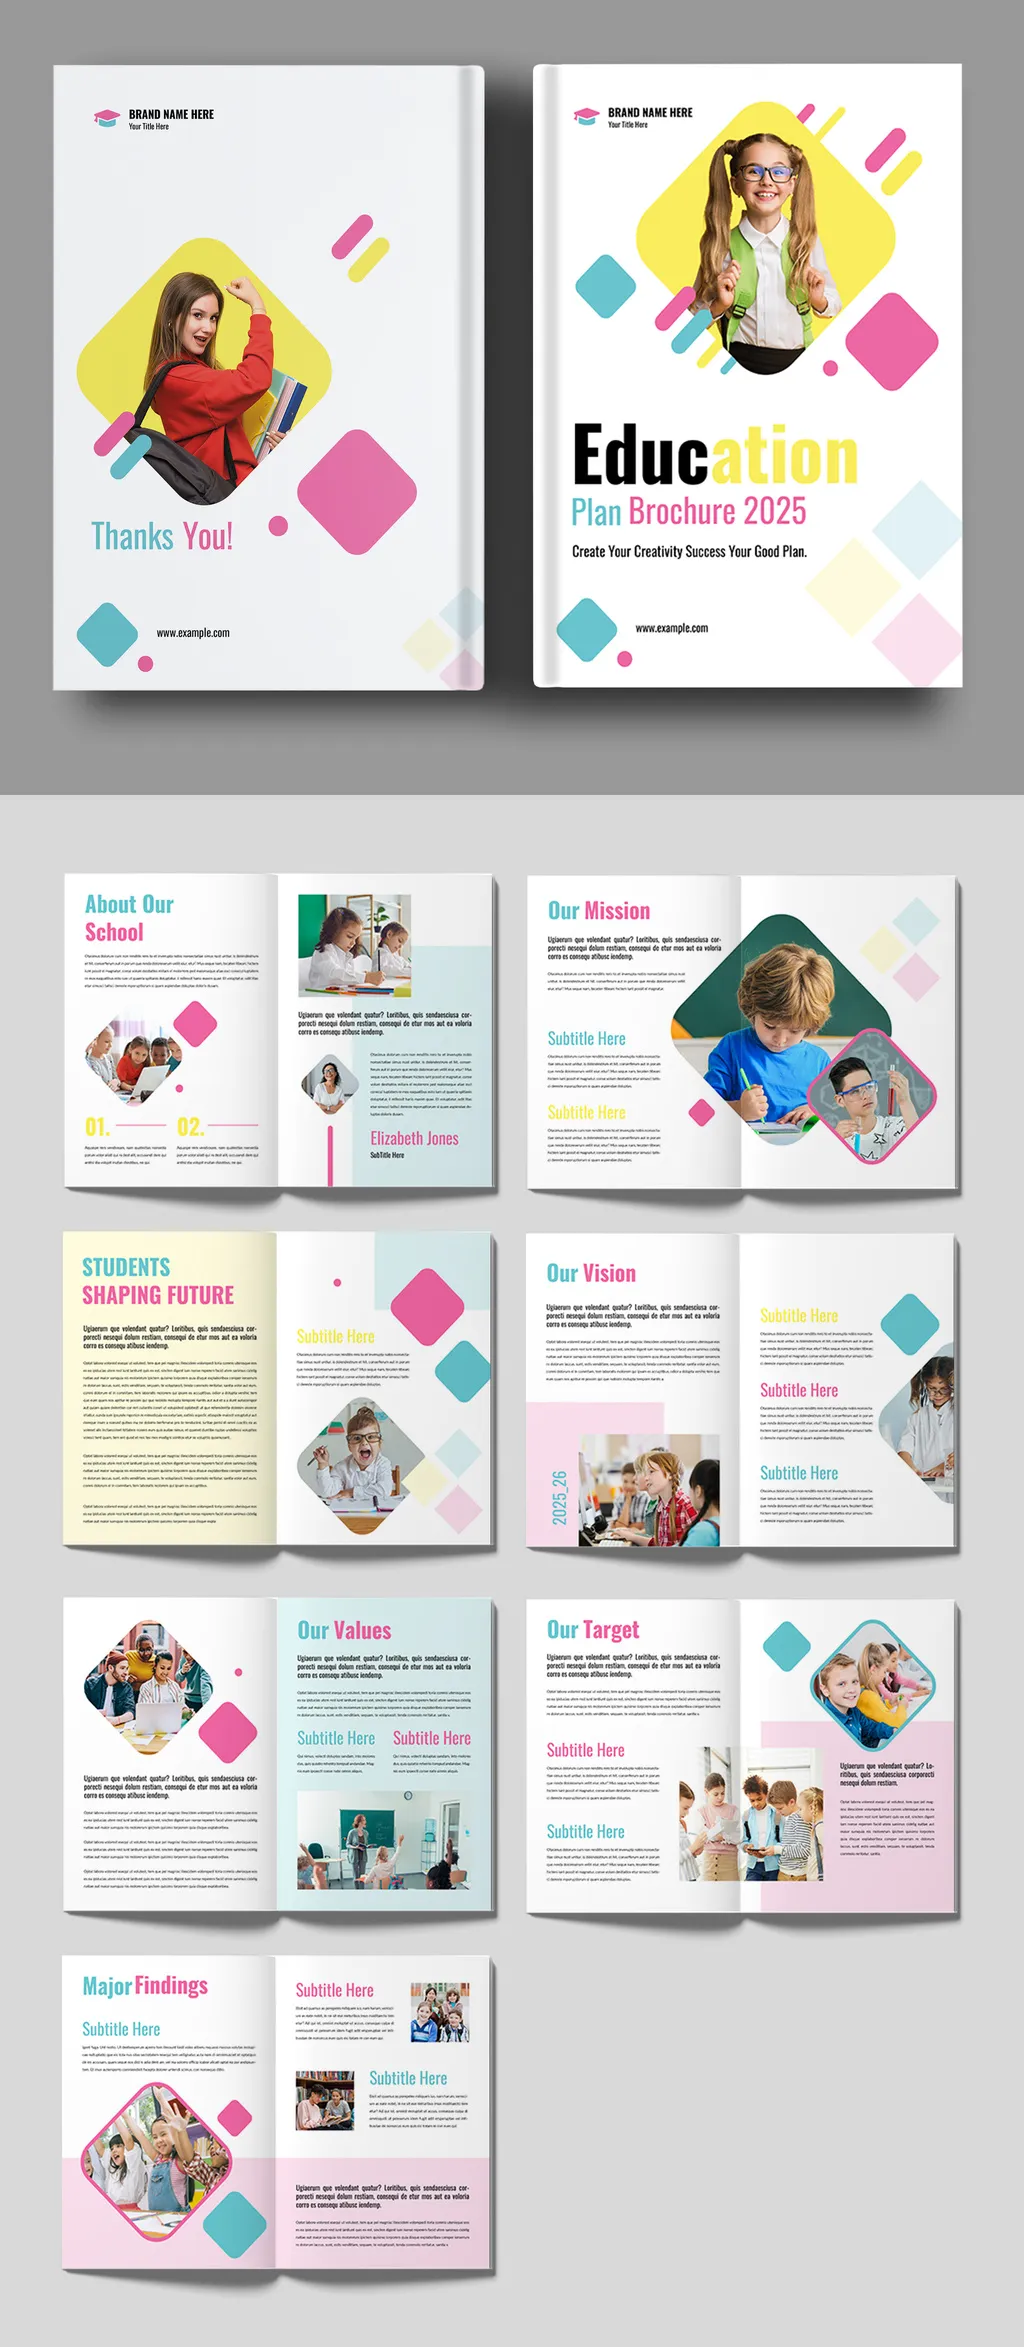 Adobestock - Education Plan Brochure Layout 759672213